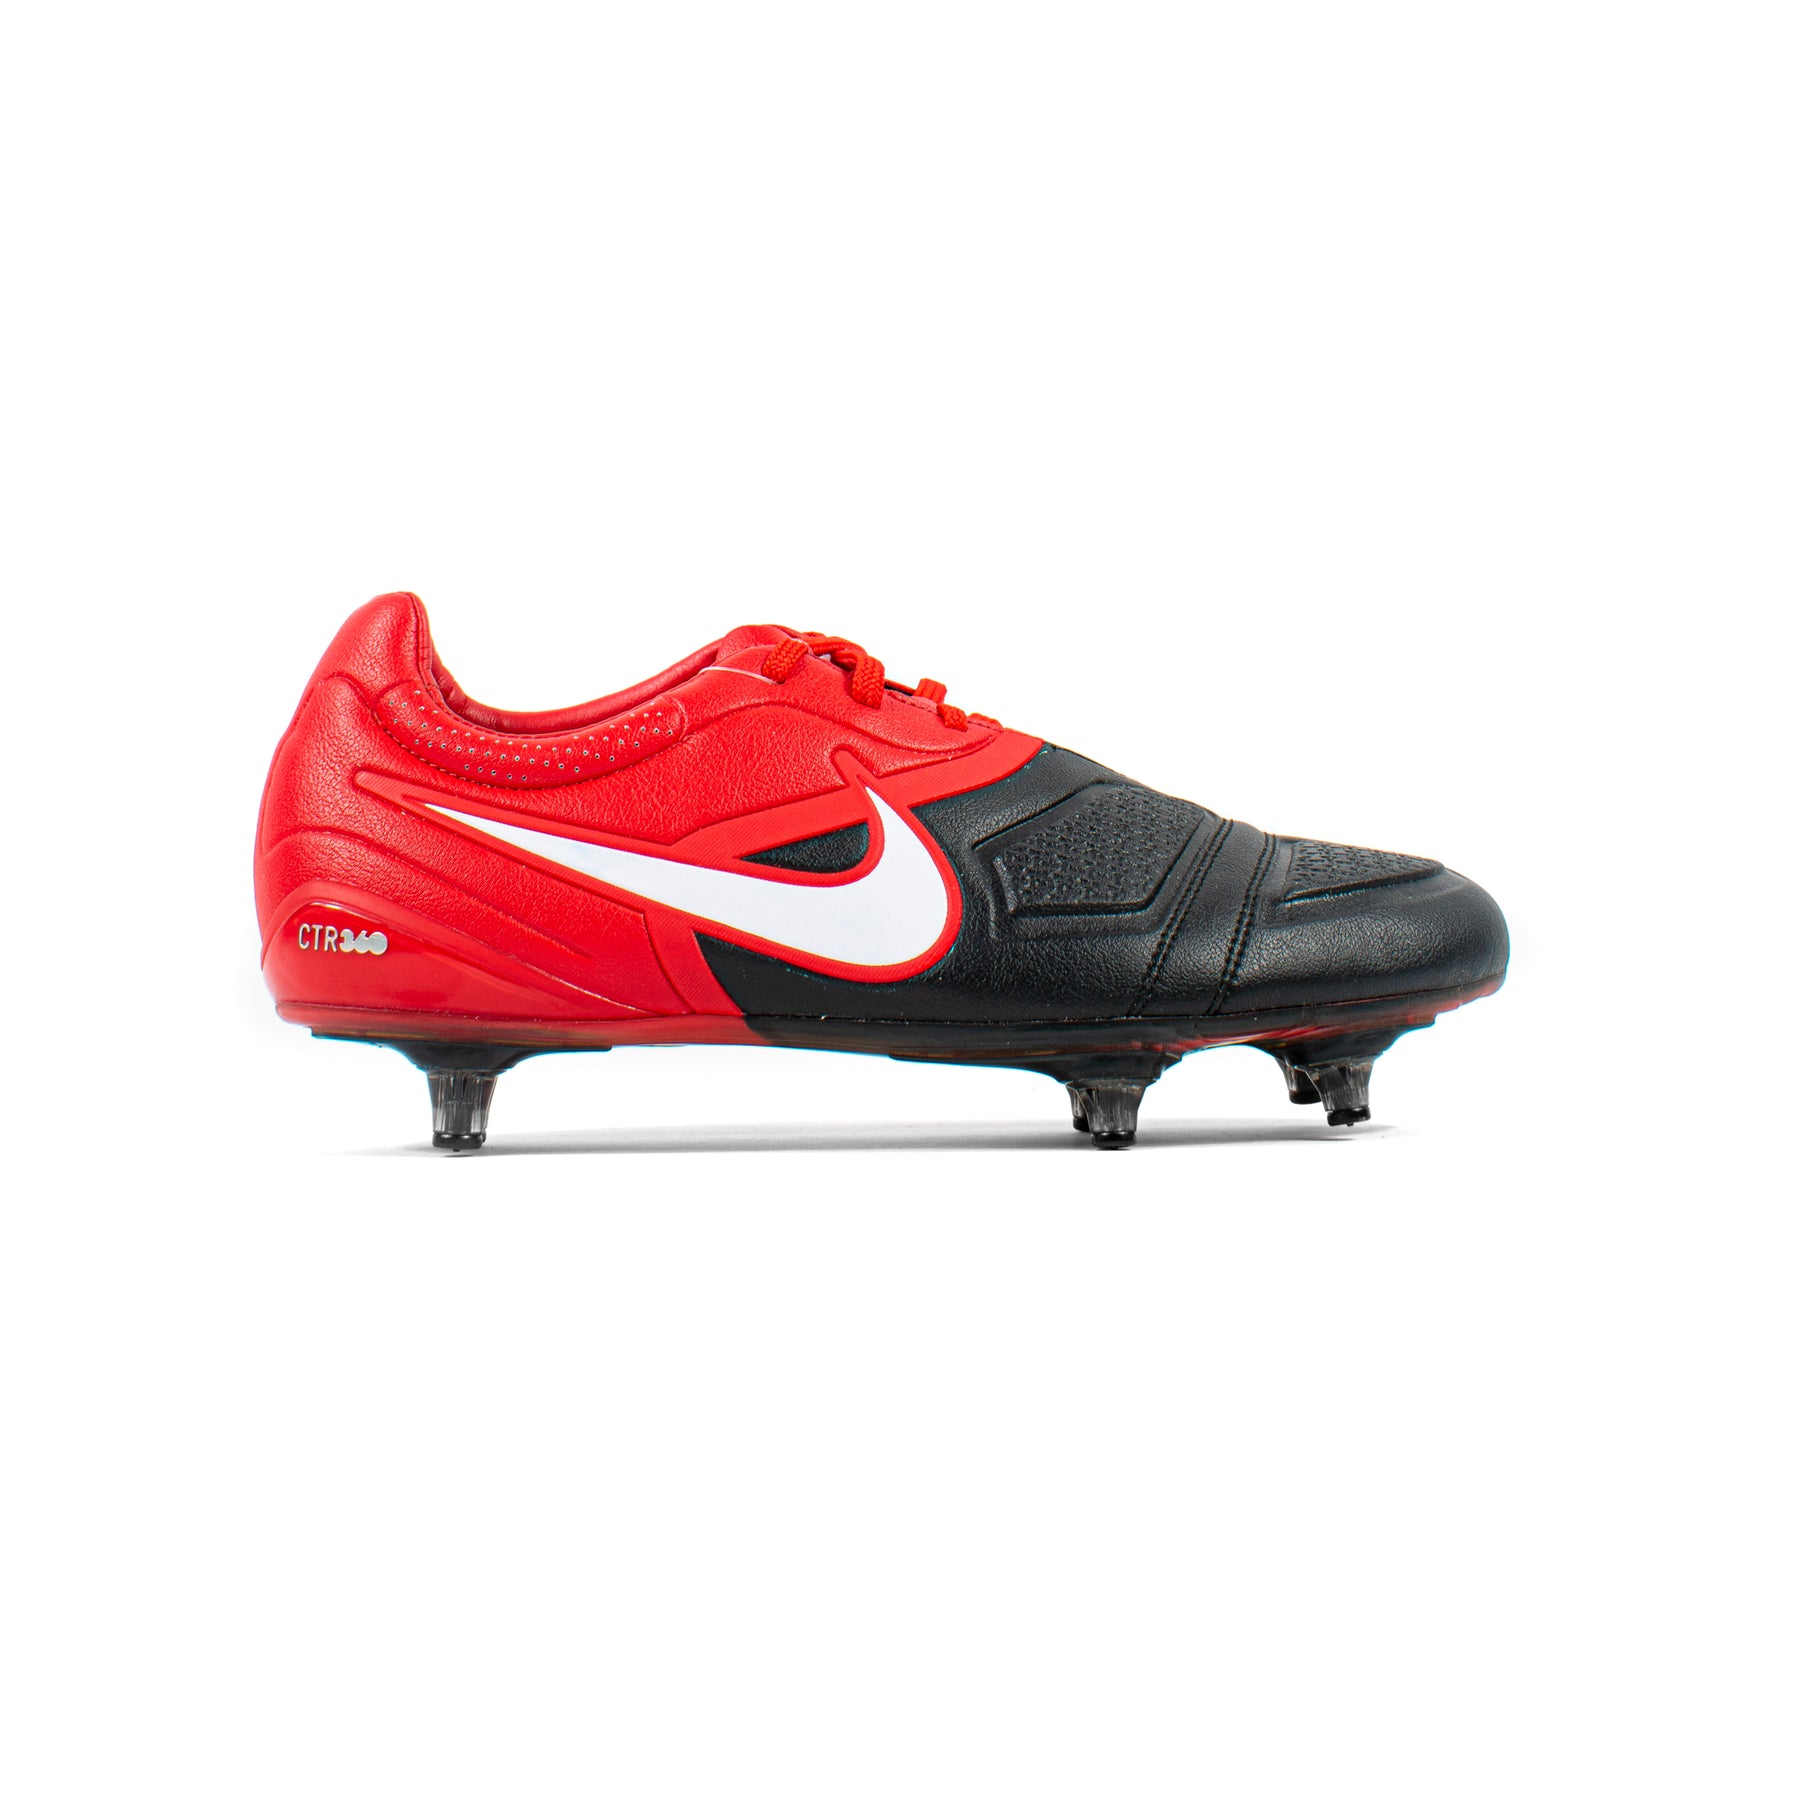 Nike CTR360 Maestri SG – Classic Soccer Cleats